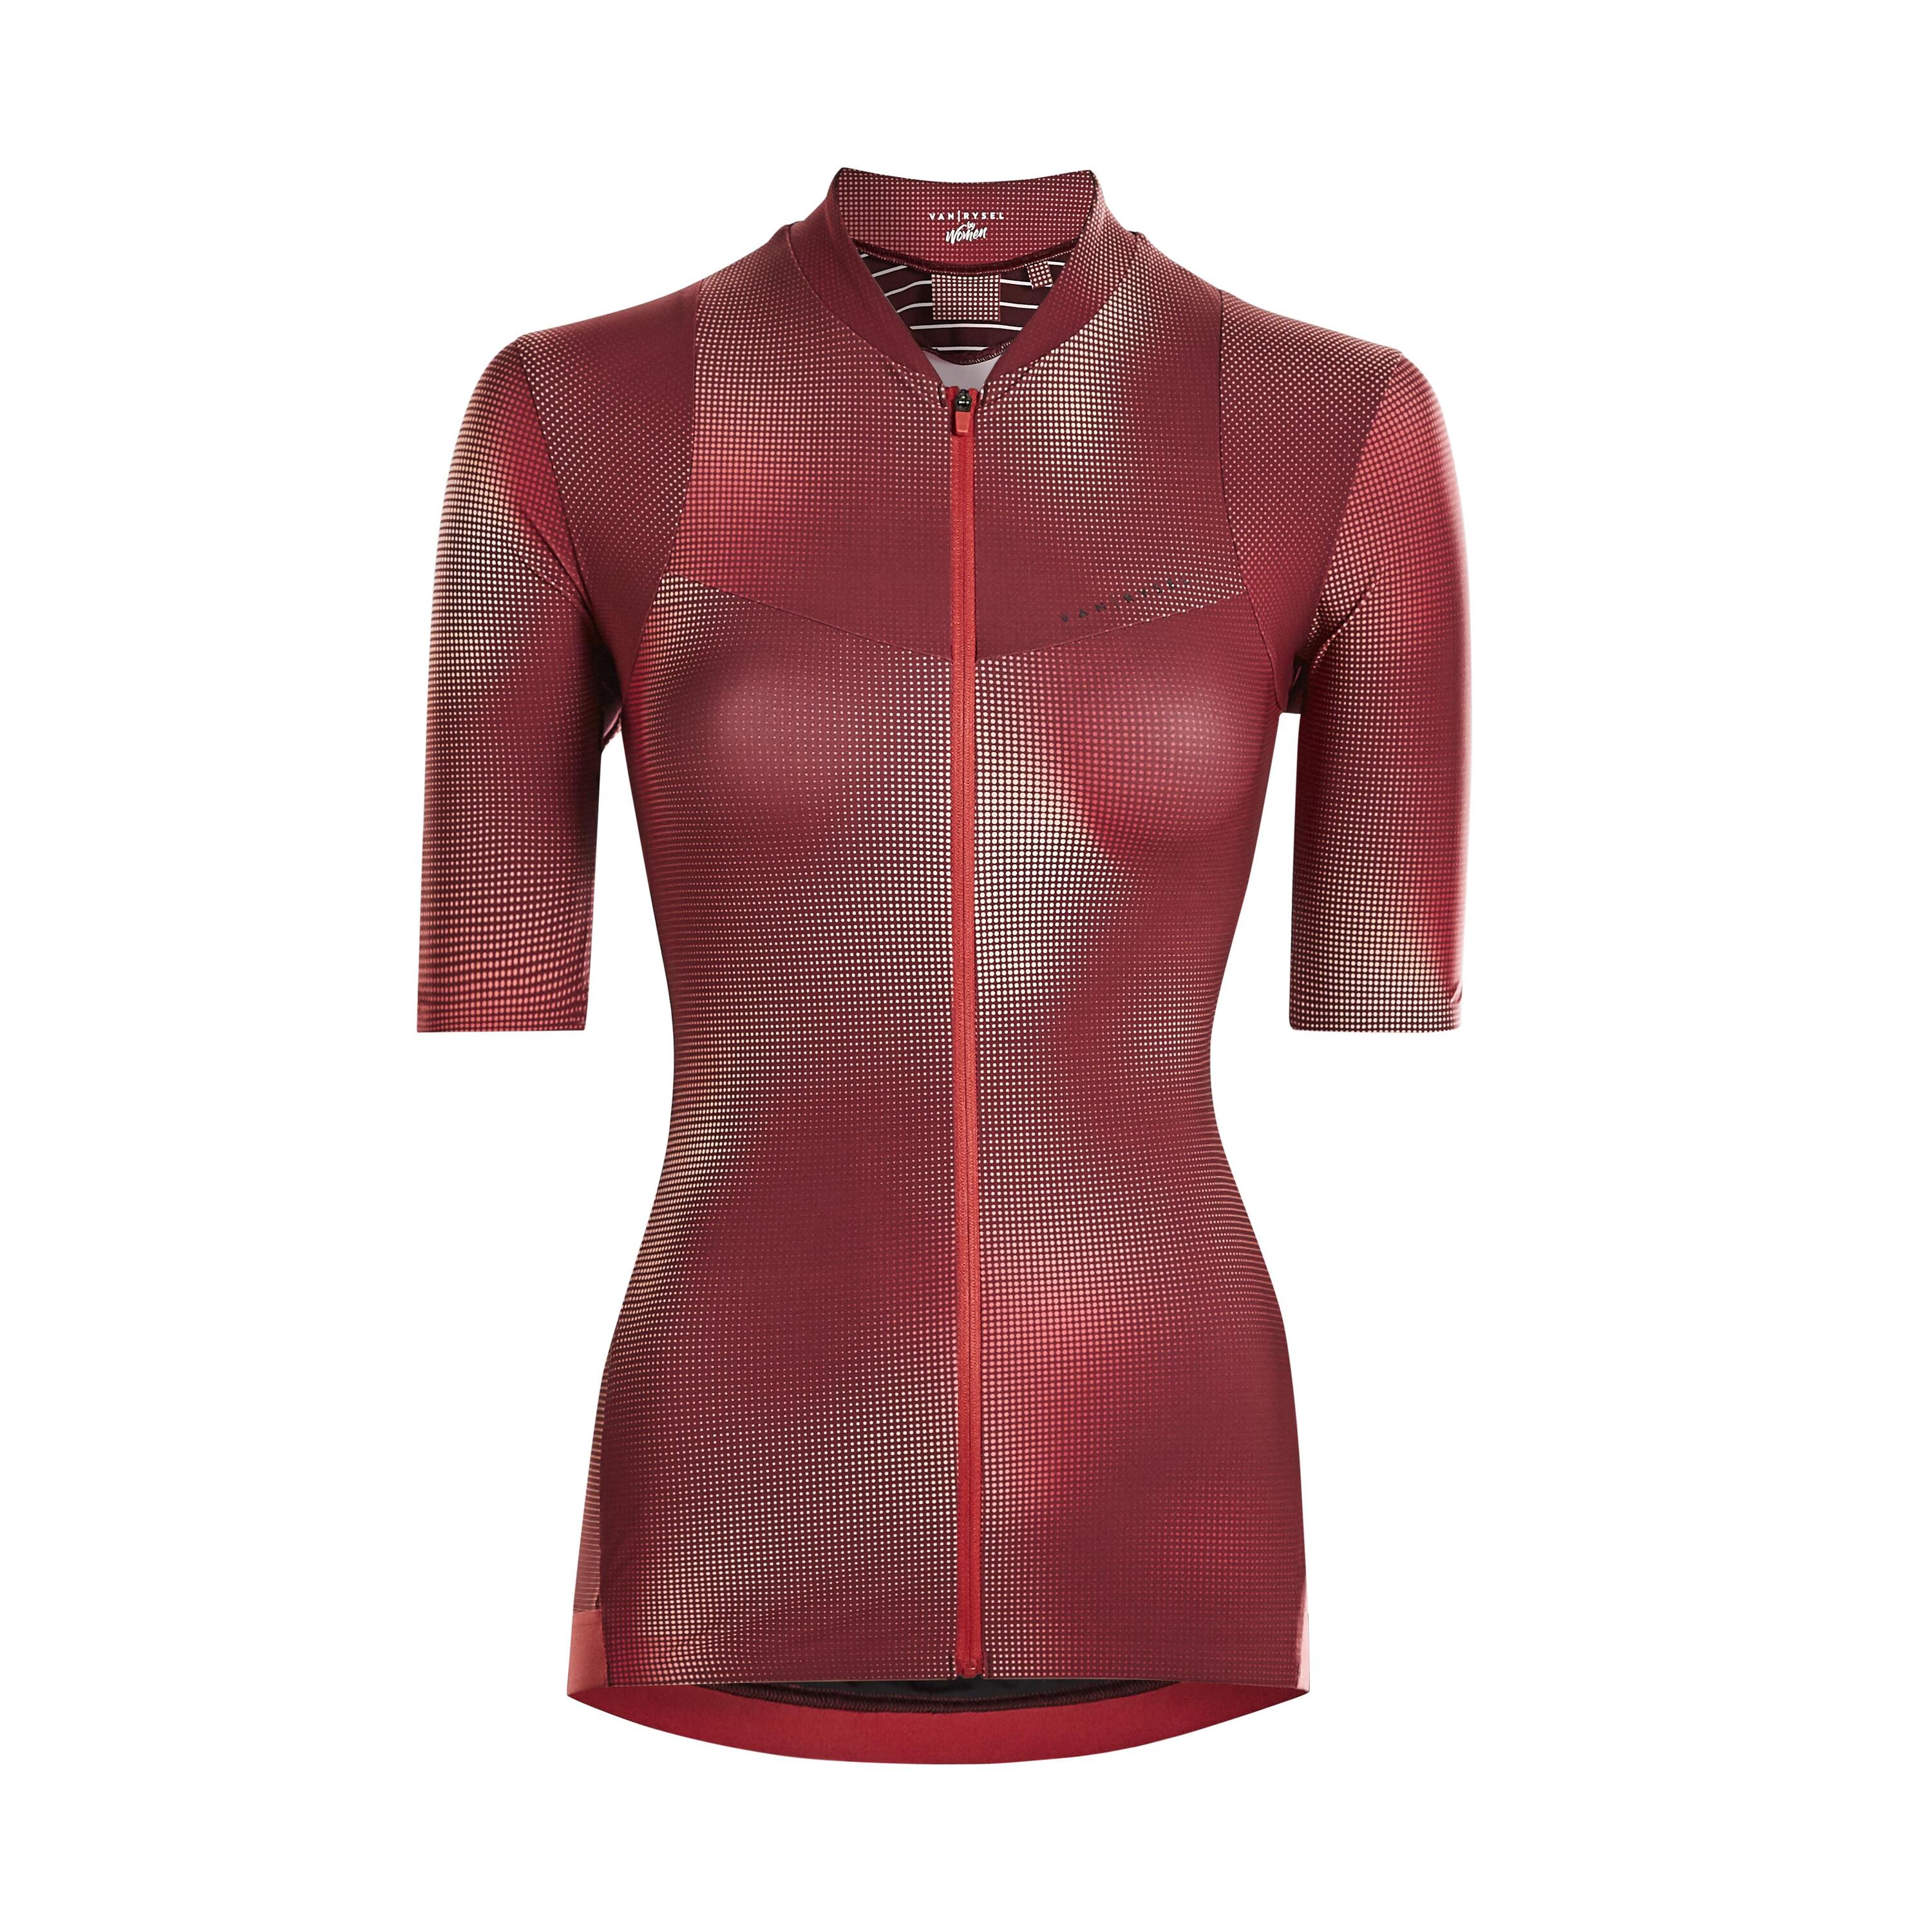 Women's Short-Sleeved Cycling Jersey RCR - Vibrant Raspberry 2/10